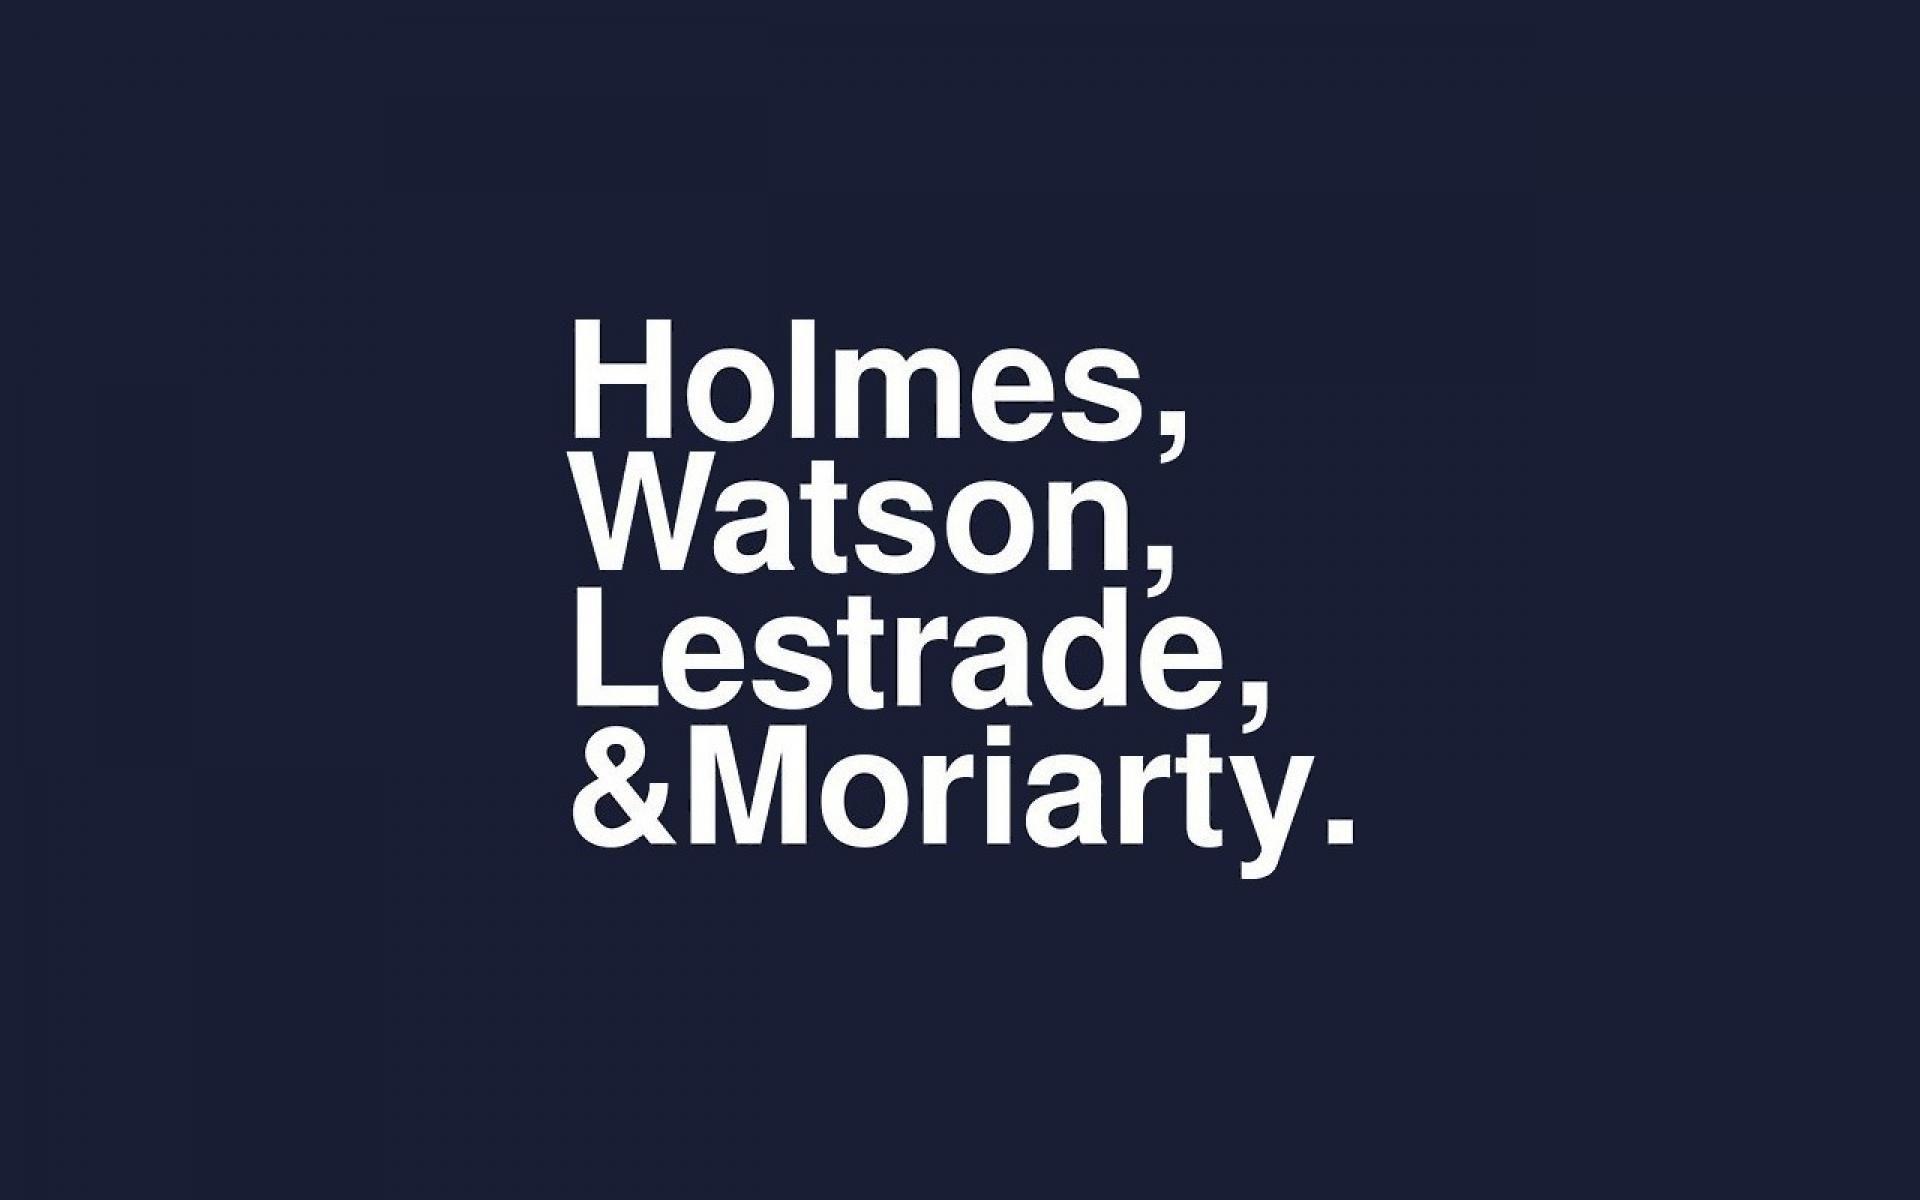 Sherlock holmes moriarty bbc wallpaper